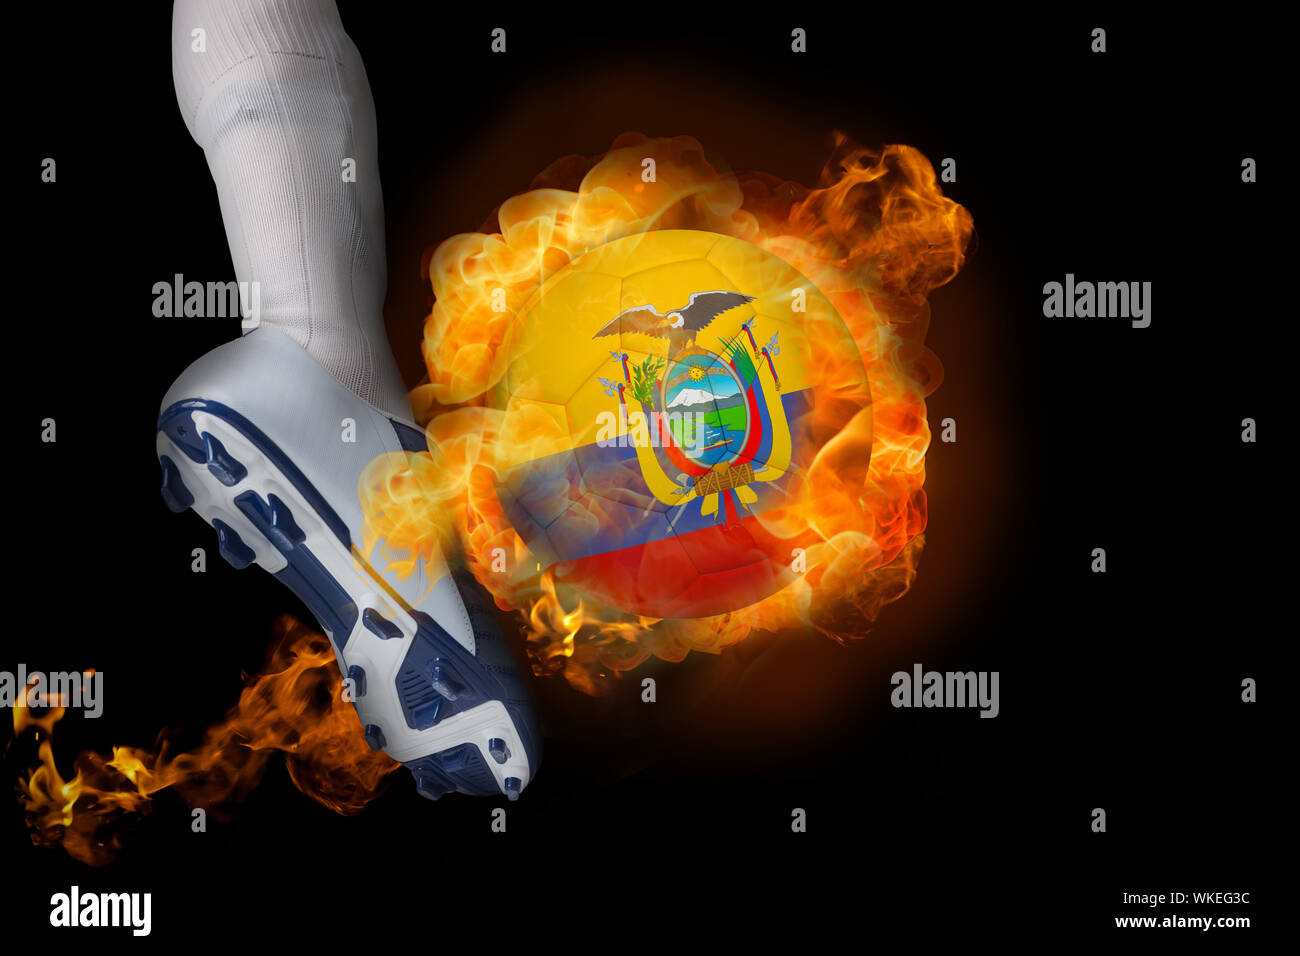 Football player kicking flaming ecuador ball against black Stock Photo